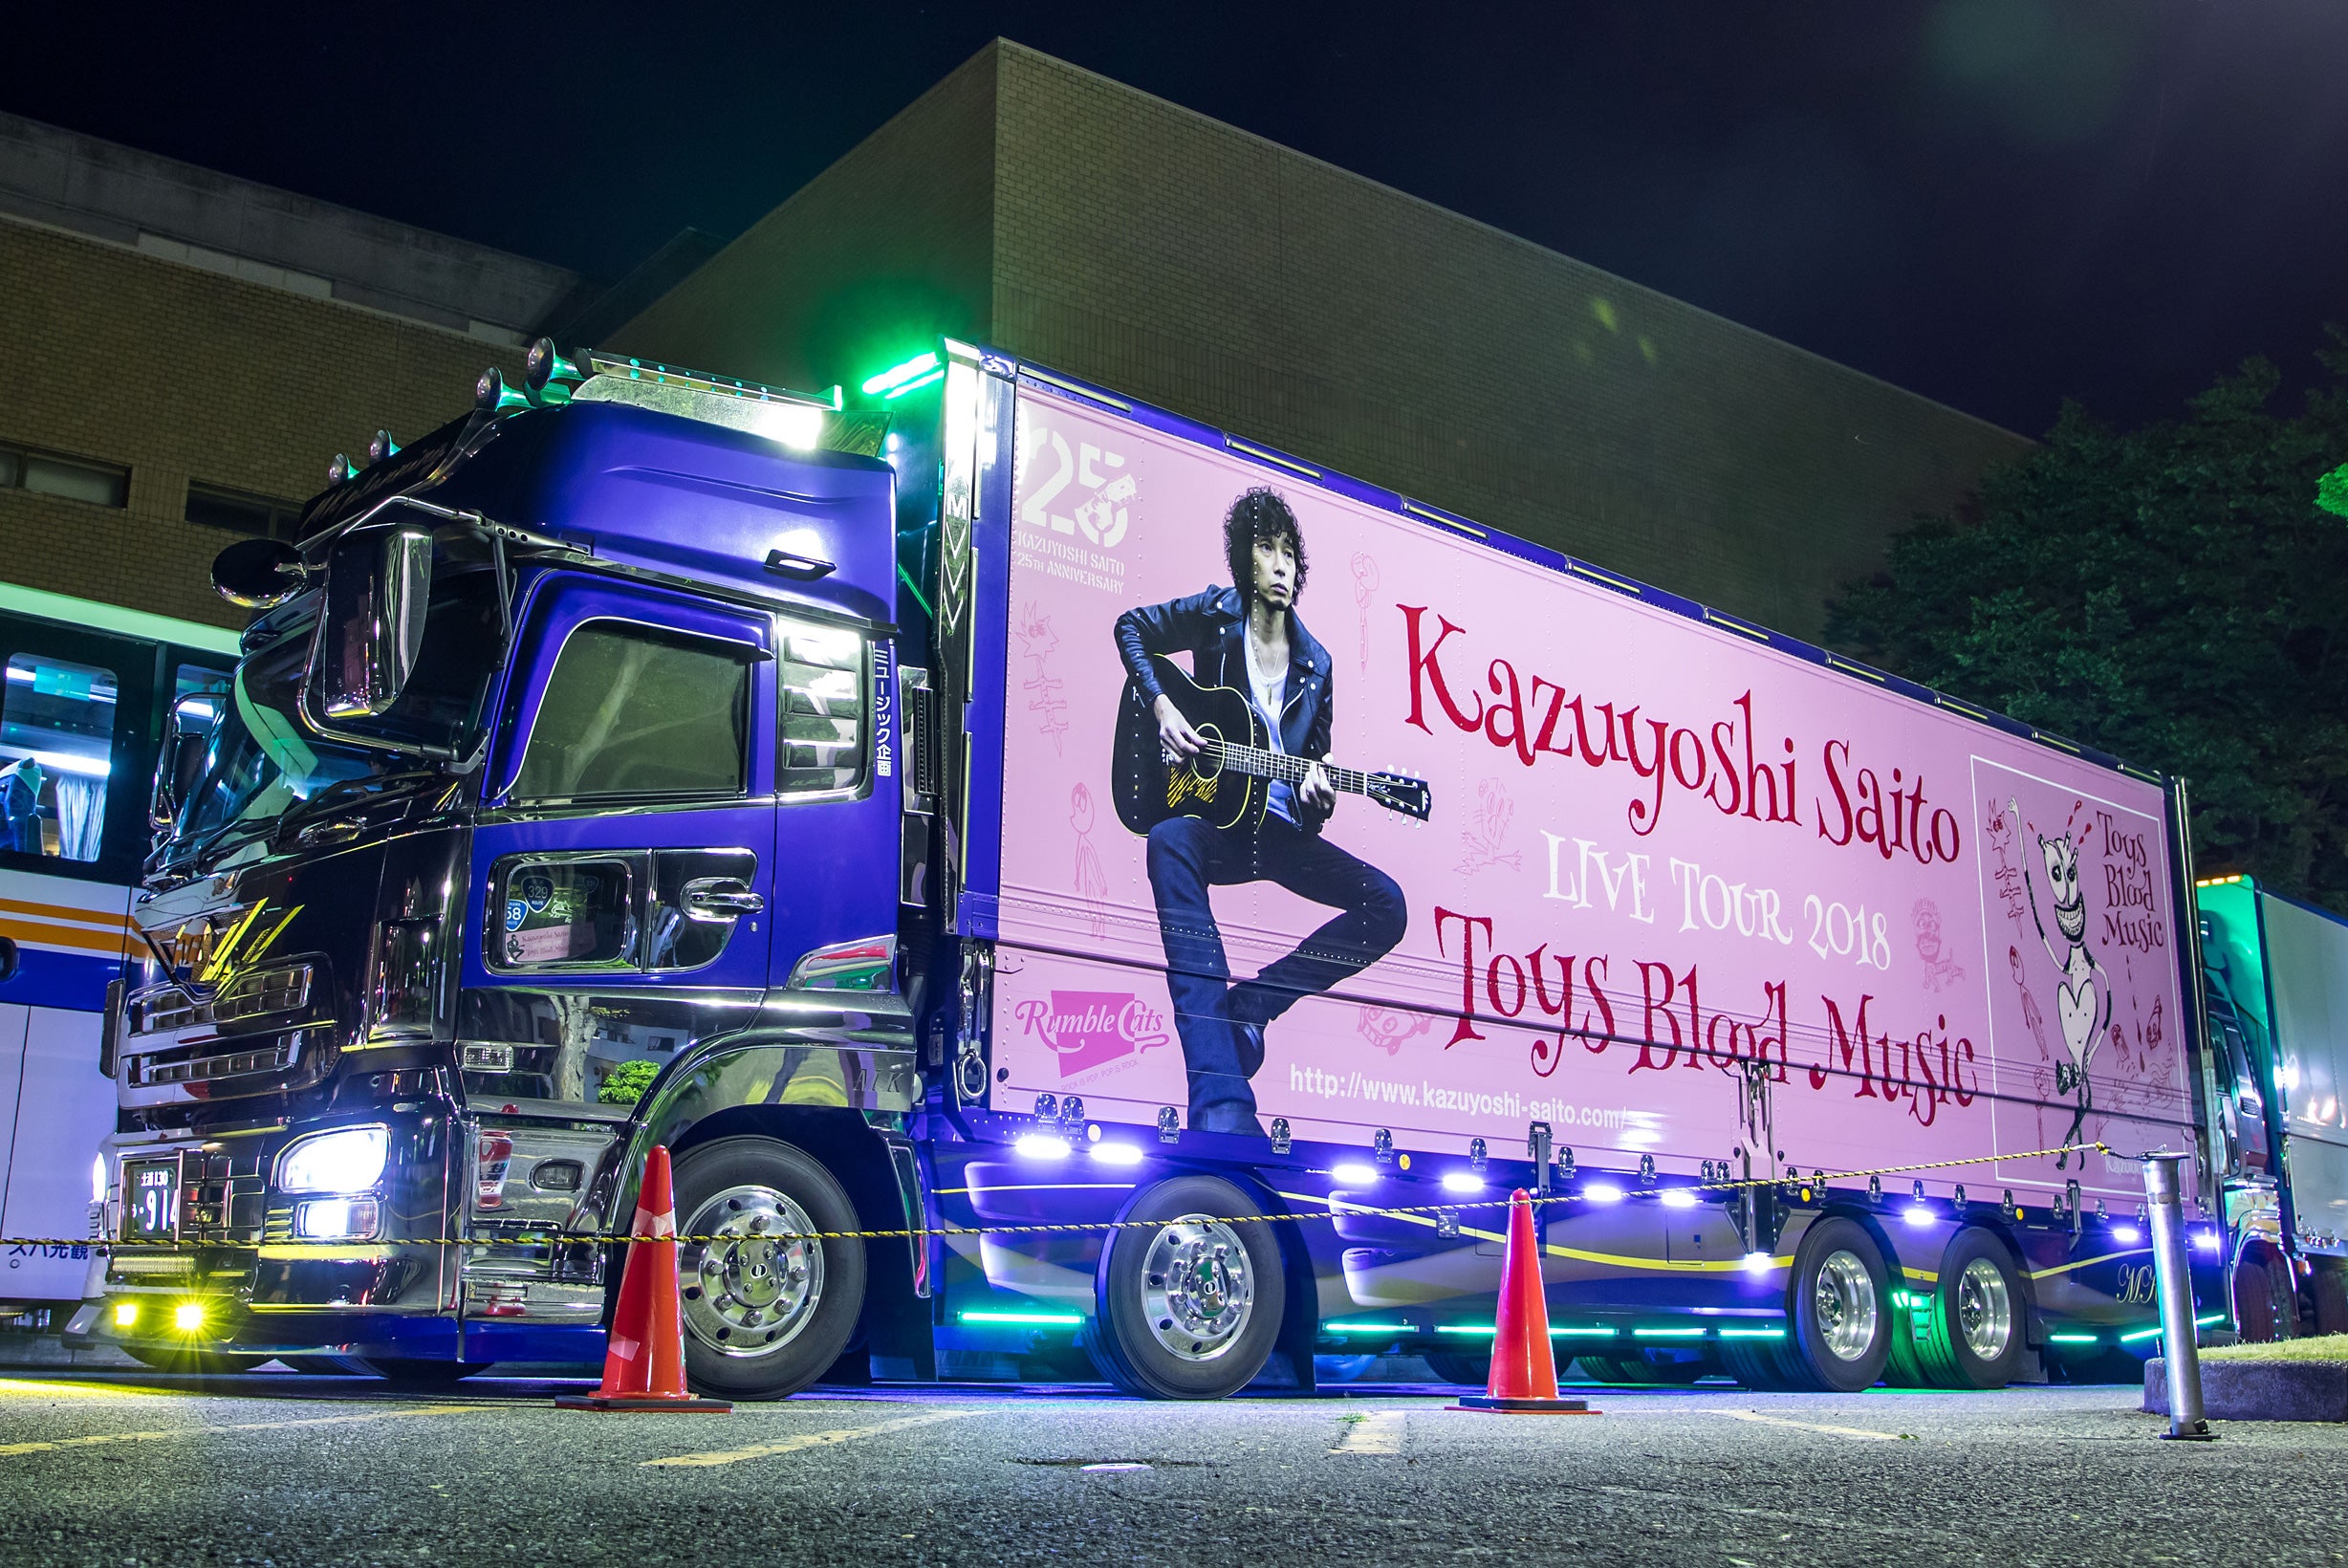 Kazuyoshi Saito LIVE TOUR 2018 Toys Blood Music Live at 山梨コラニー文化ホール2018.06.02 [DVD] mxn26g8